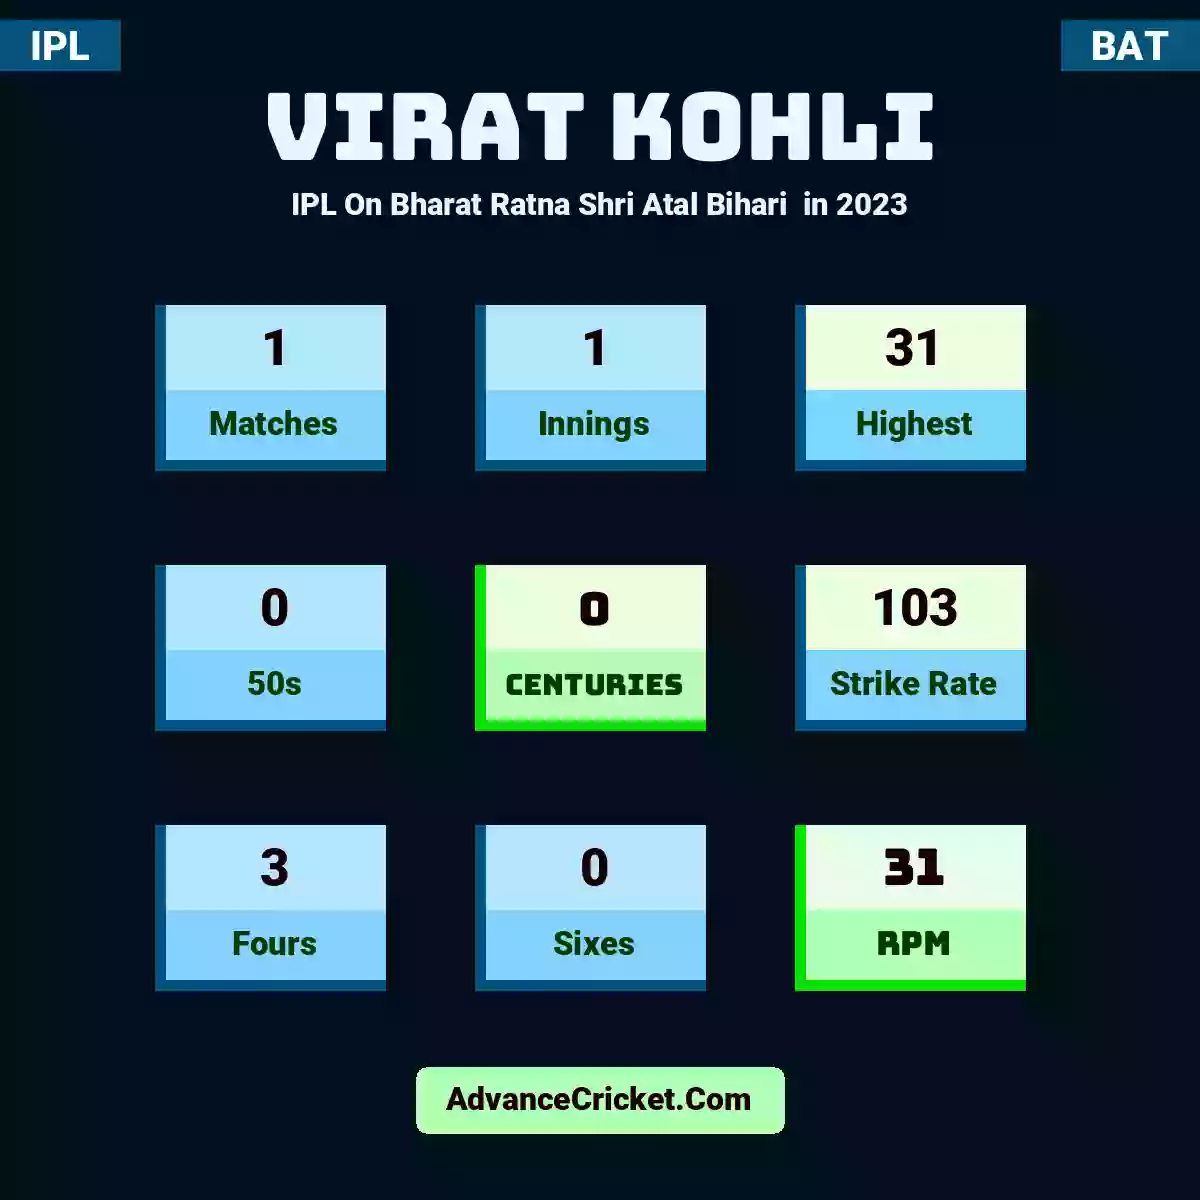 Virat Kohli IPL  On Bharat Ratna Shri Atal Bihari  in 2023, Virat Kohli played 1 matches, scored 31 runs as highest, 0 half-centuries, and 0 centuries, with a strike rate of 103. V.Kohli hit 3 fours and 0 sixes, with an RPM of 31.